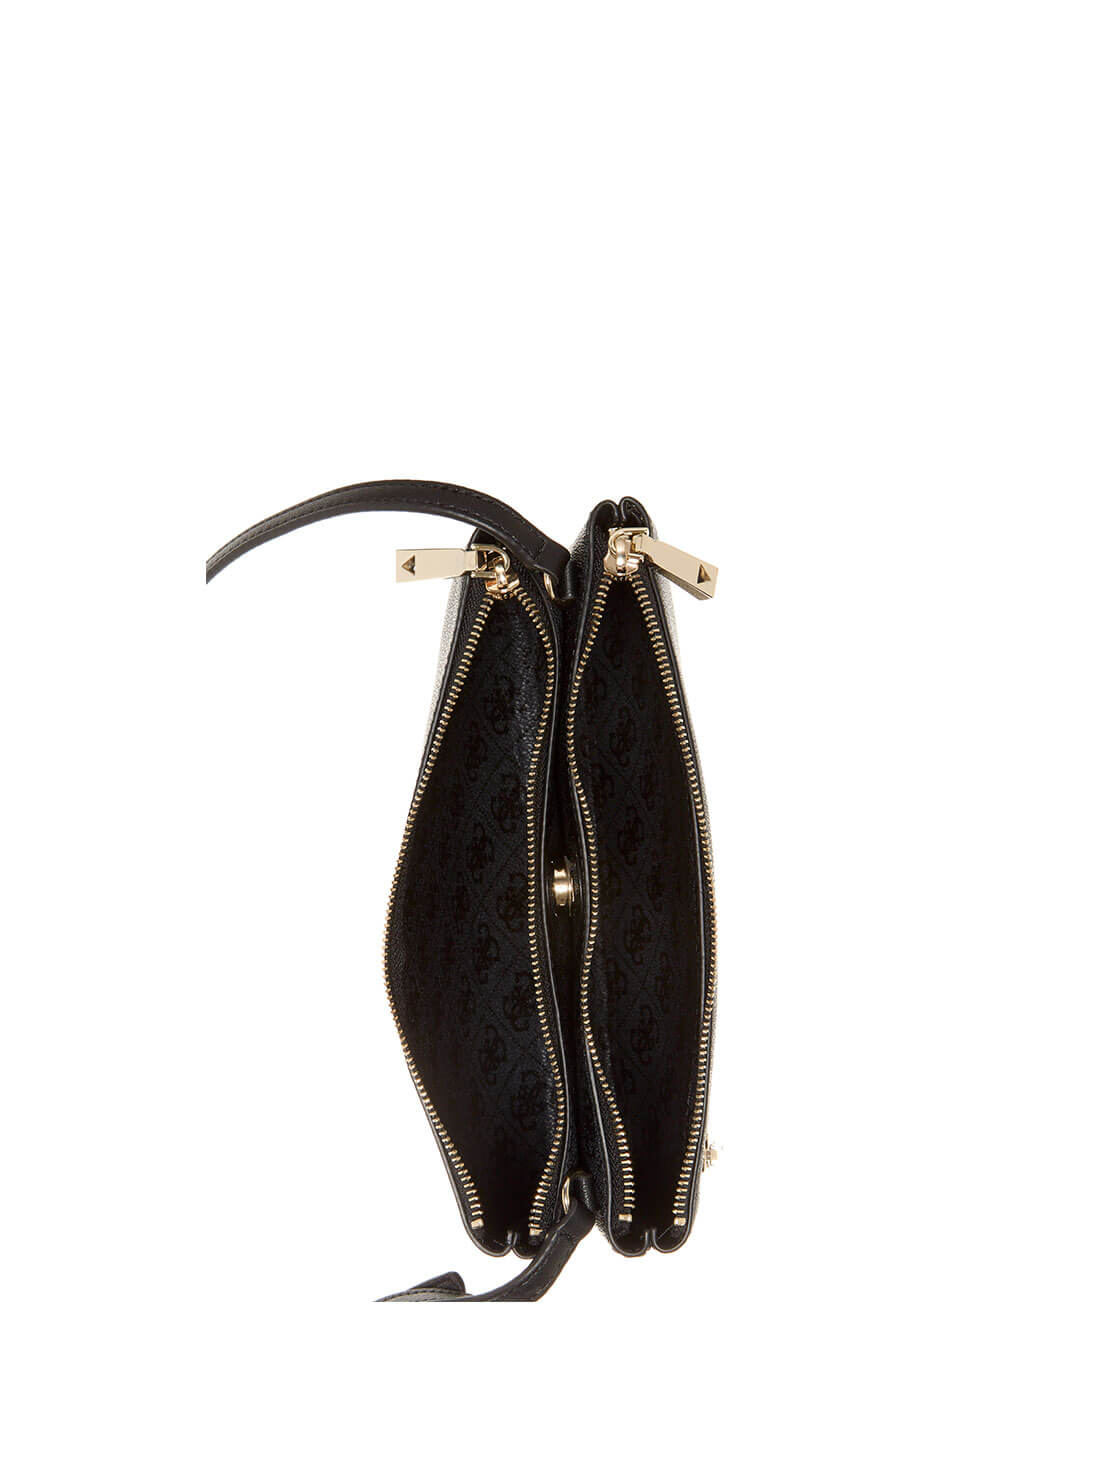 Black Logo Naya Crossbody Bag | GUESS Women's Handbags | inside view